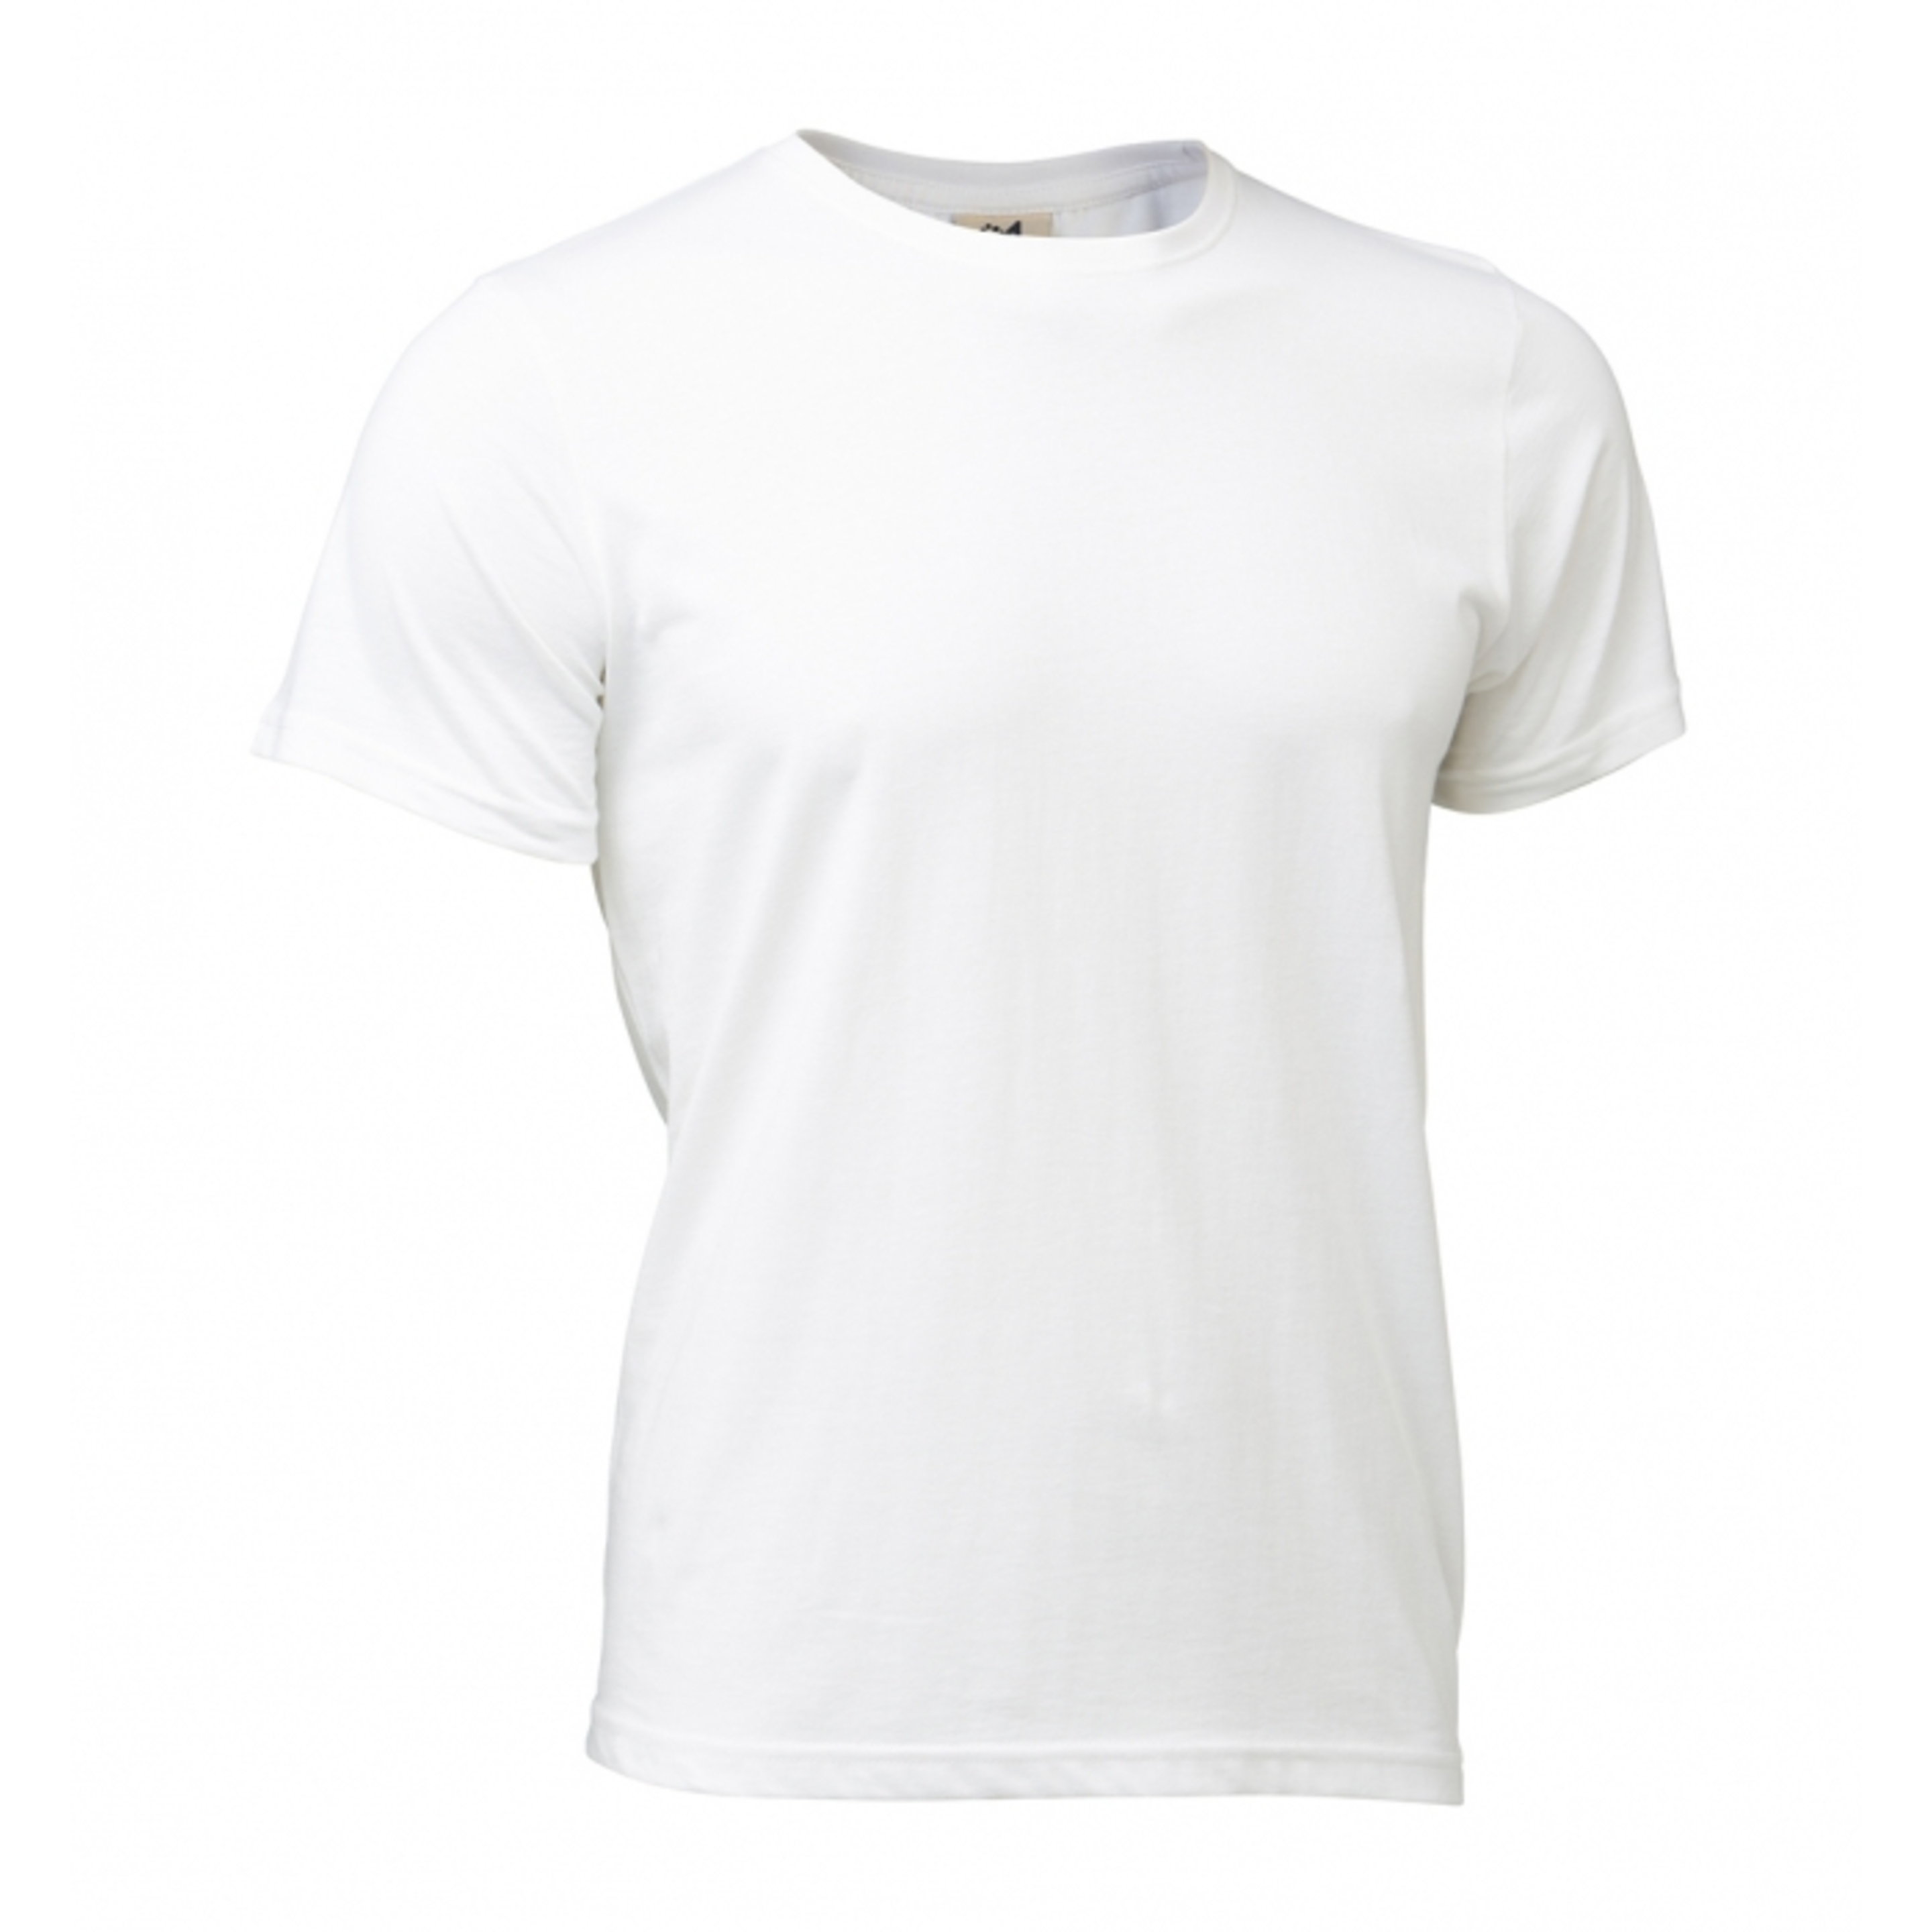 Camiseta Manga Curta Unissex Prata Asioka - blanco - 